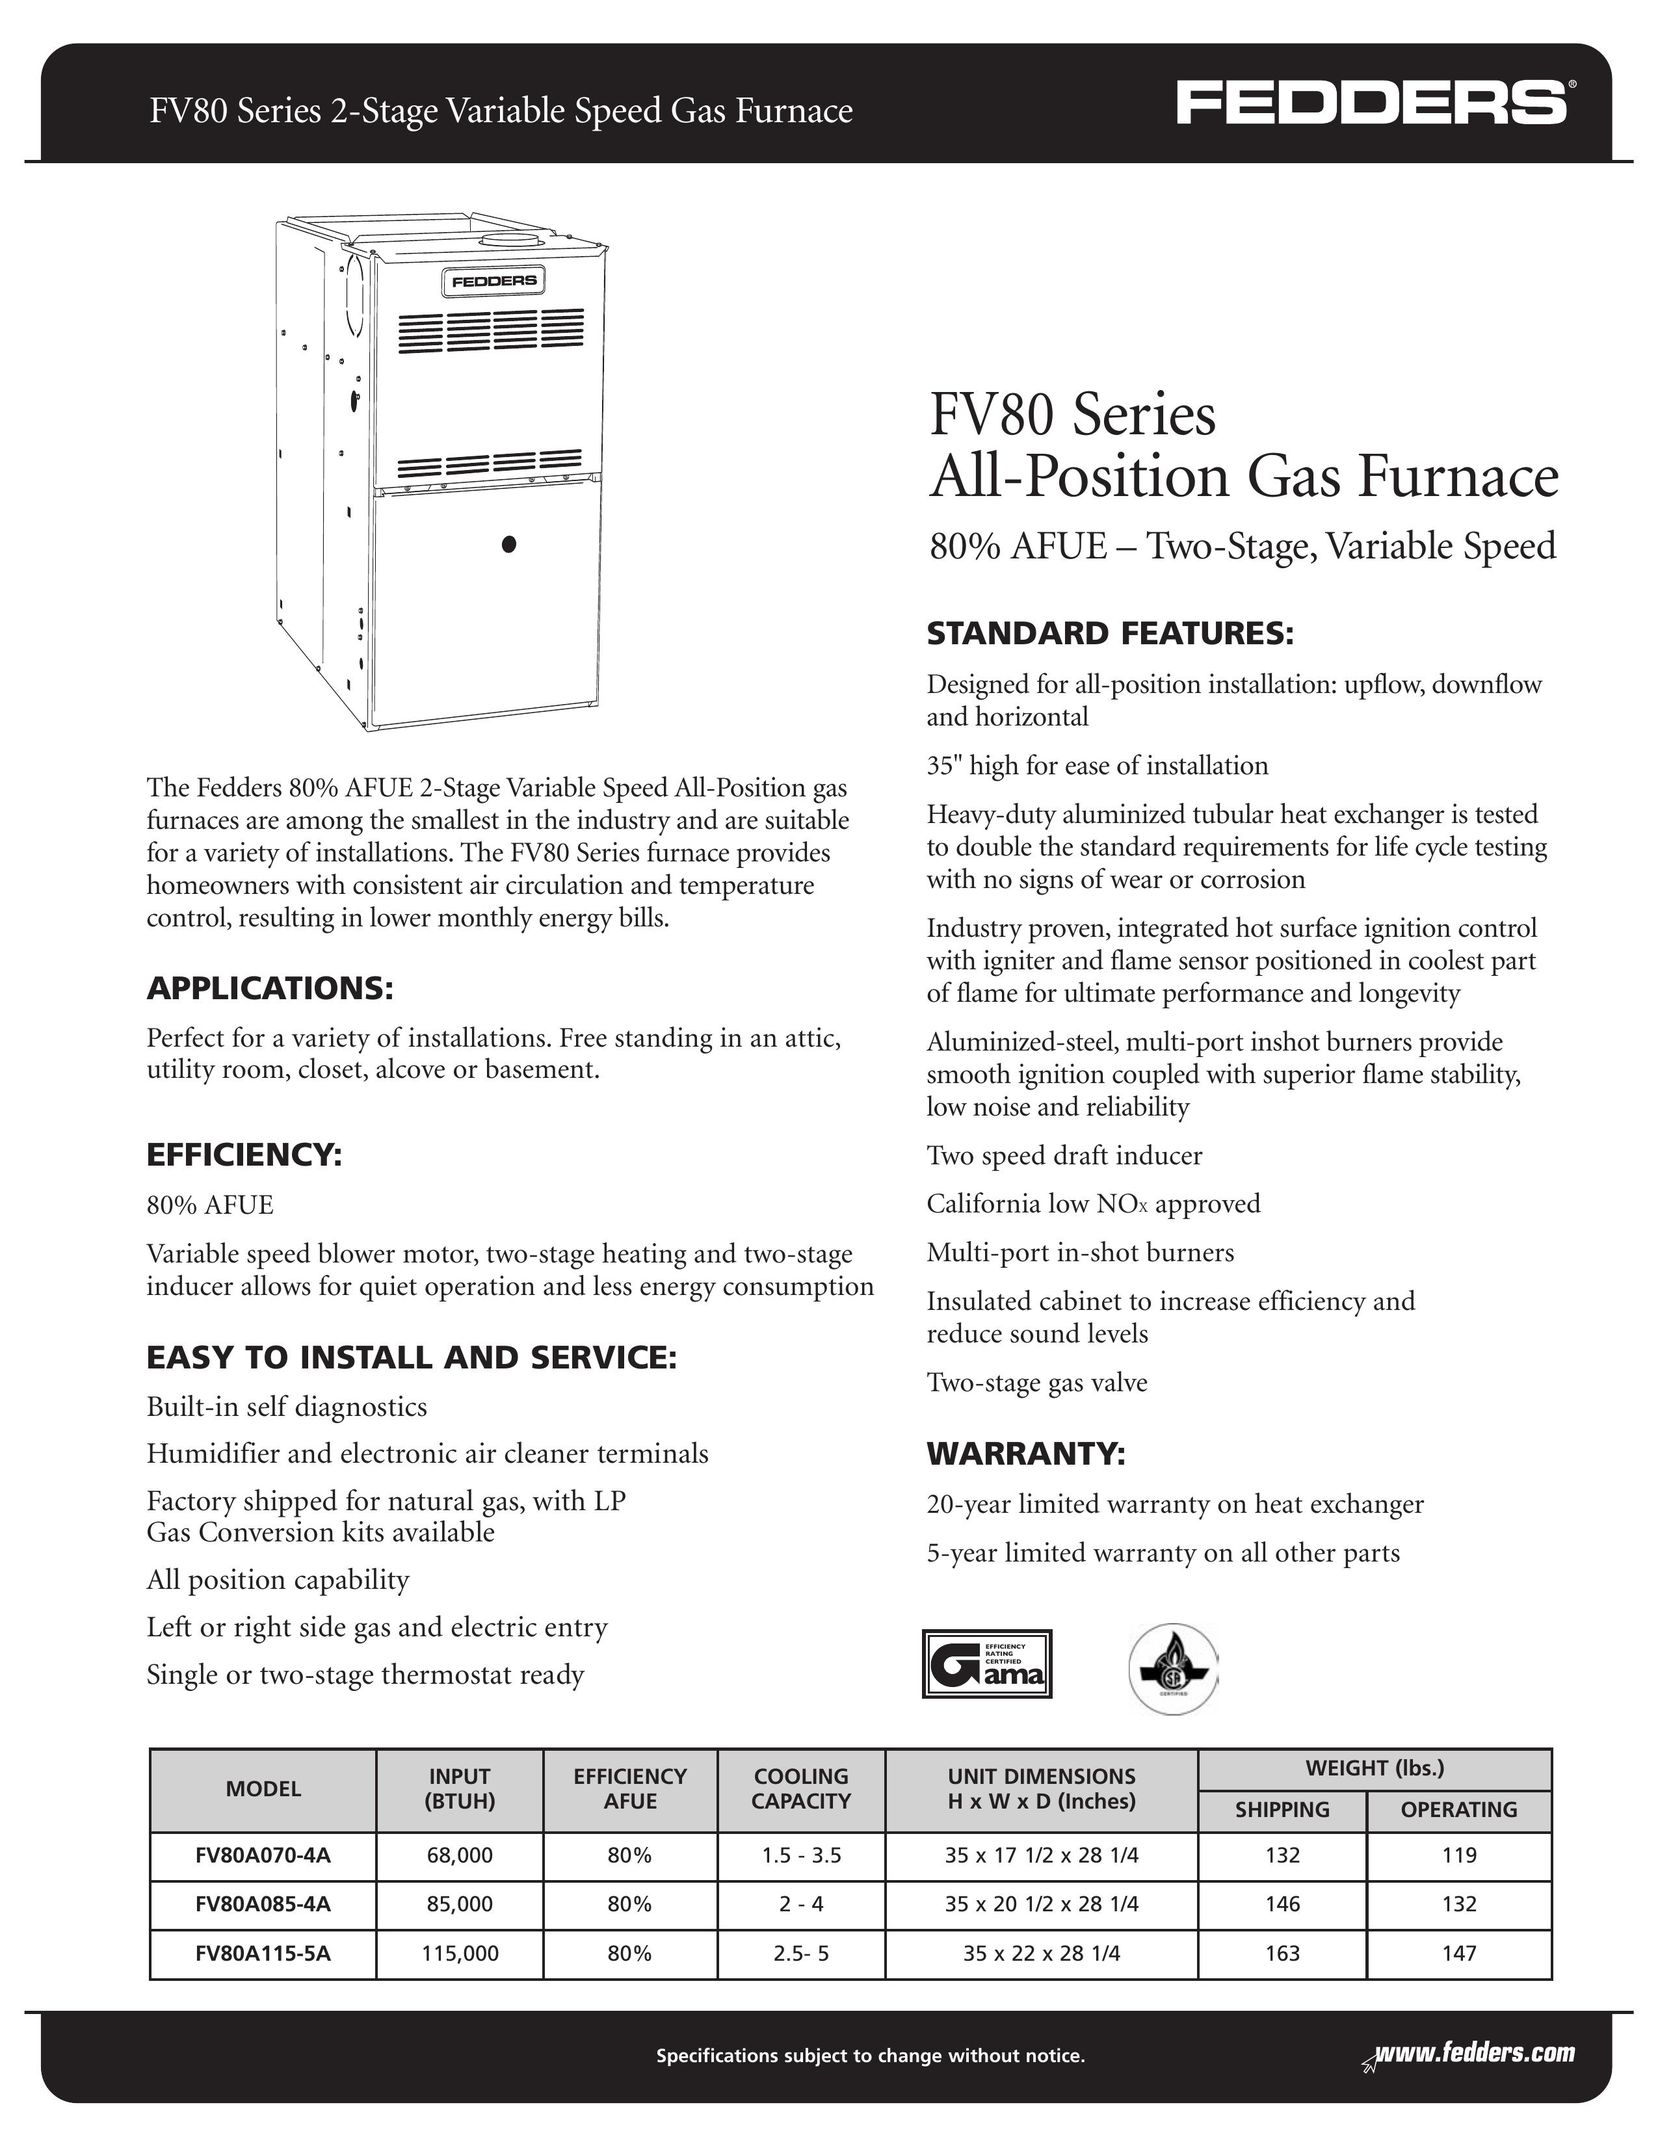 Fedders FV80 Series Furnace User Manual